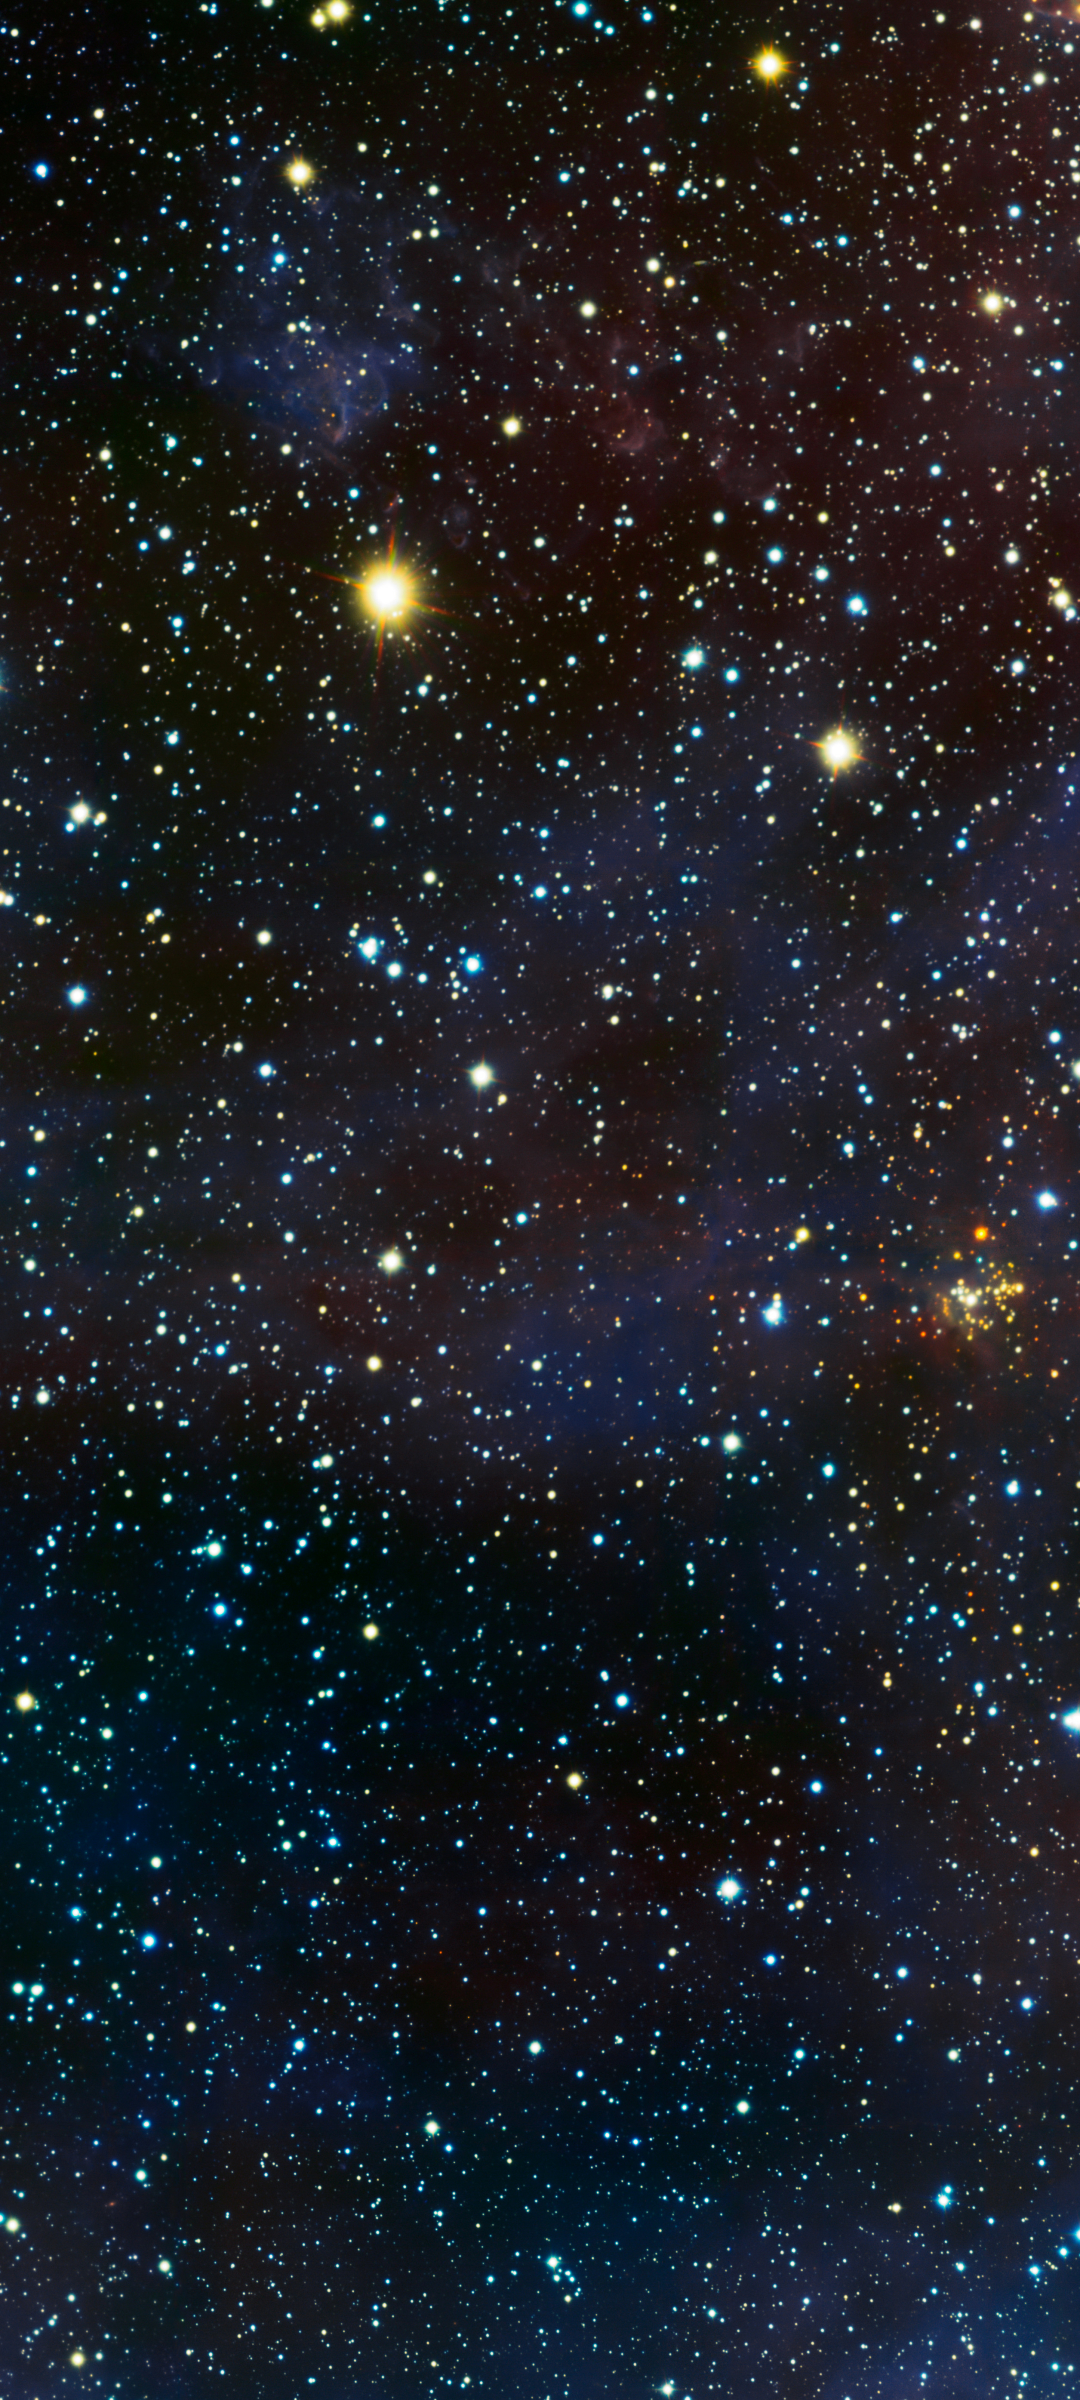 ESO’s VLT reveals the Carina Nebula's hidden secrets by ESO